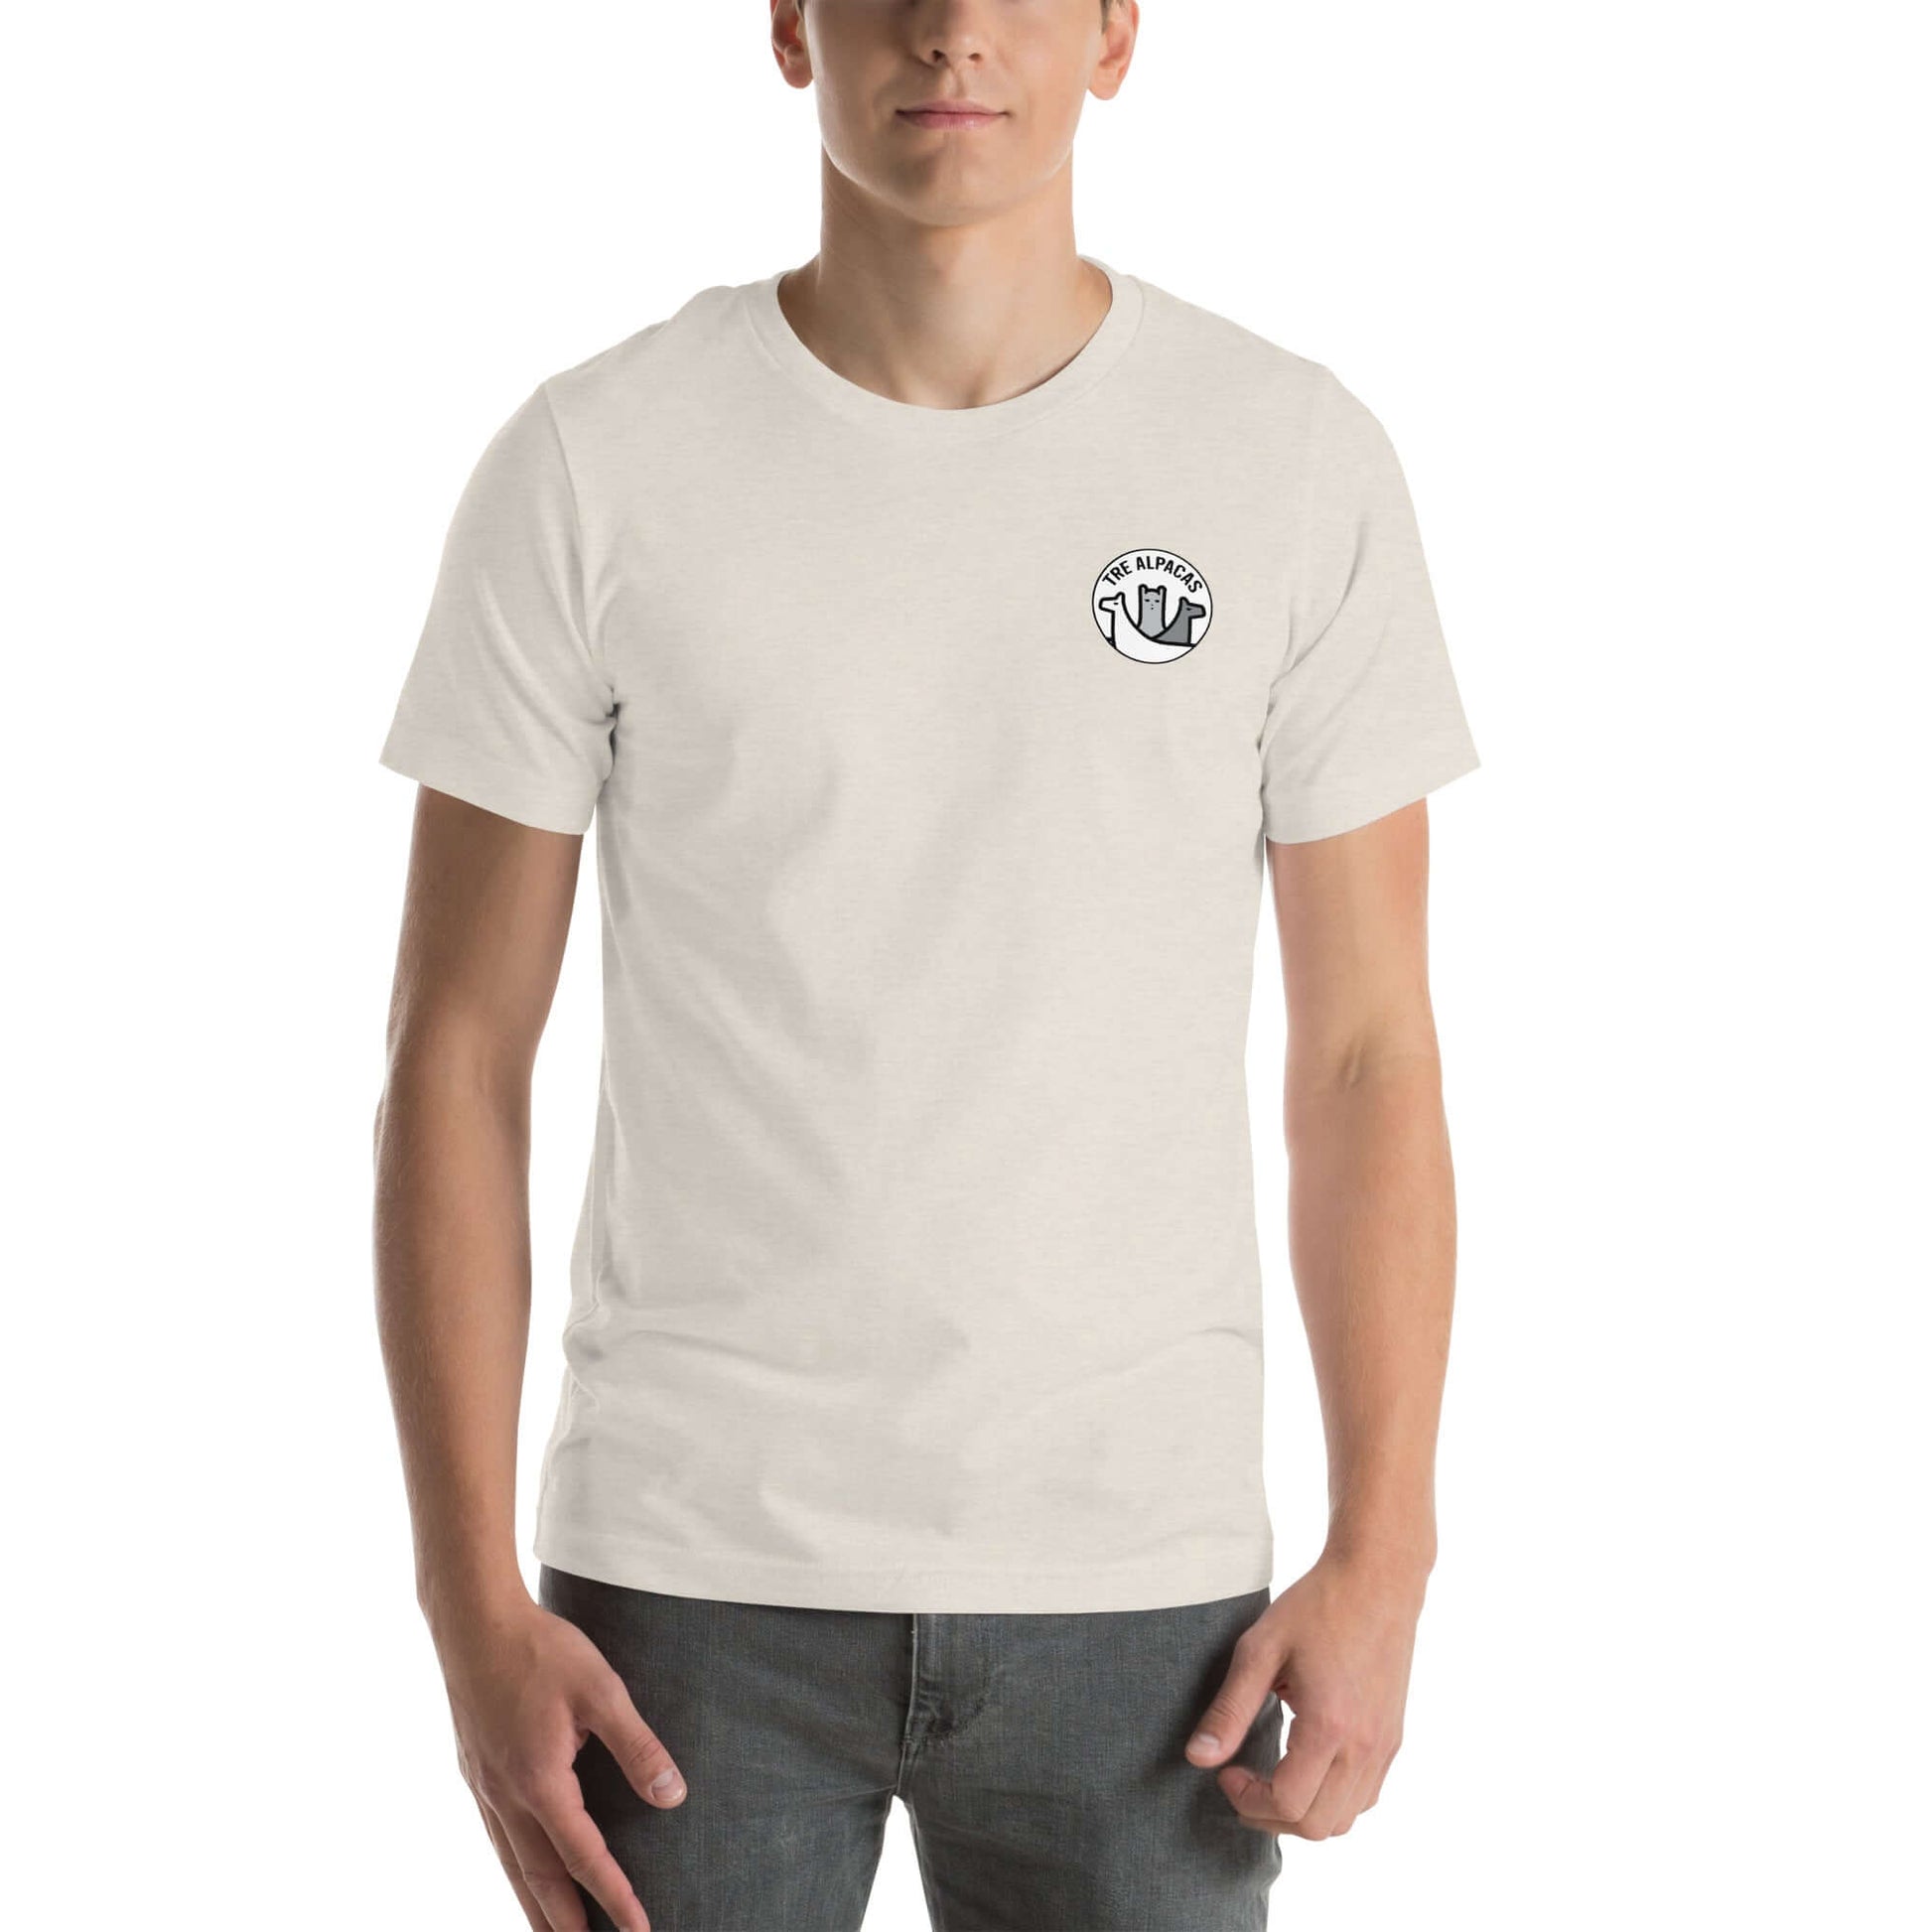 100% Baumwoll-T-Shirt mit Alpaka-Motiv, bequemer Schnitt